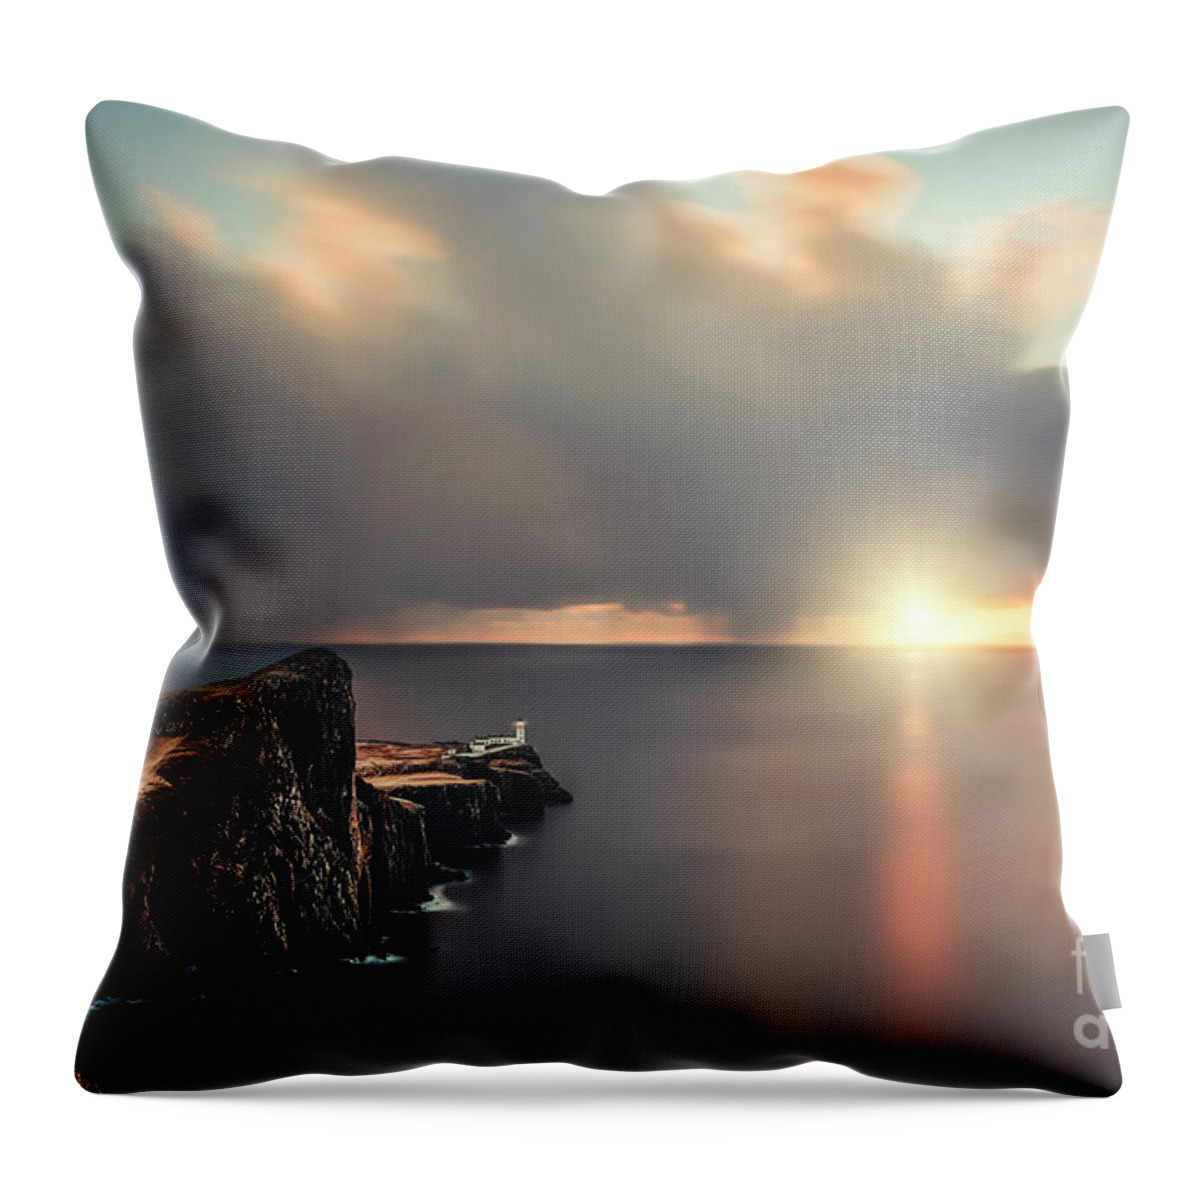 Kremsdorf Throw Pillow featuring the photograph Midwinter Fires by Evelina Kremsdorf